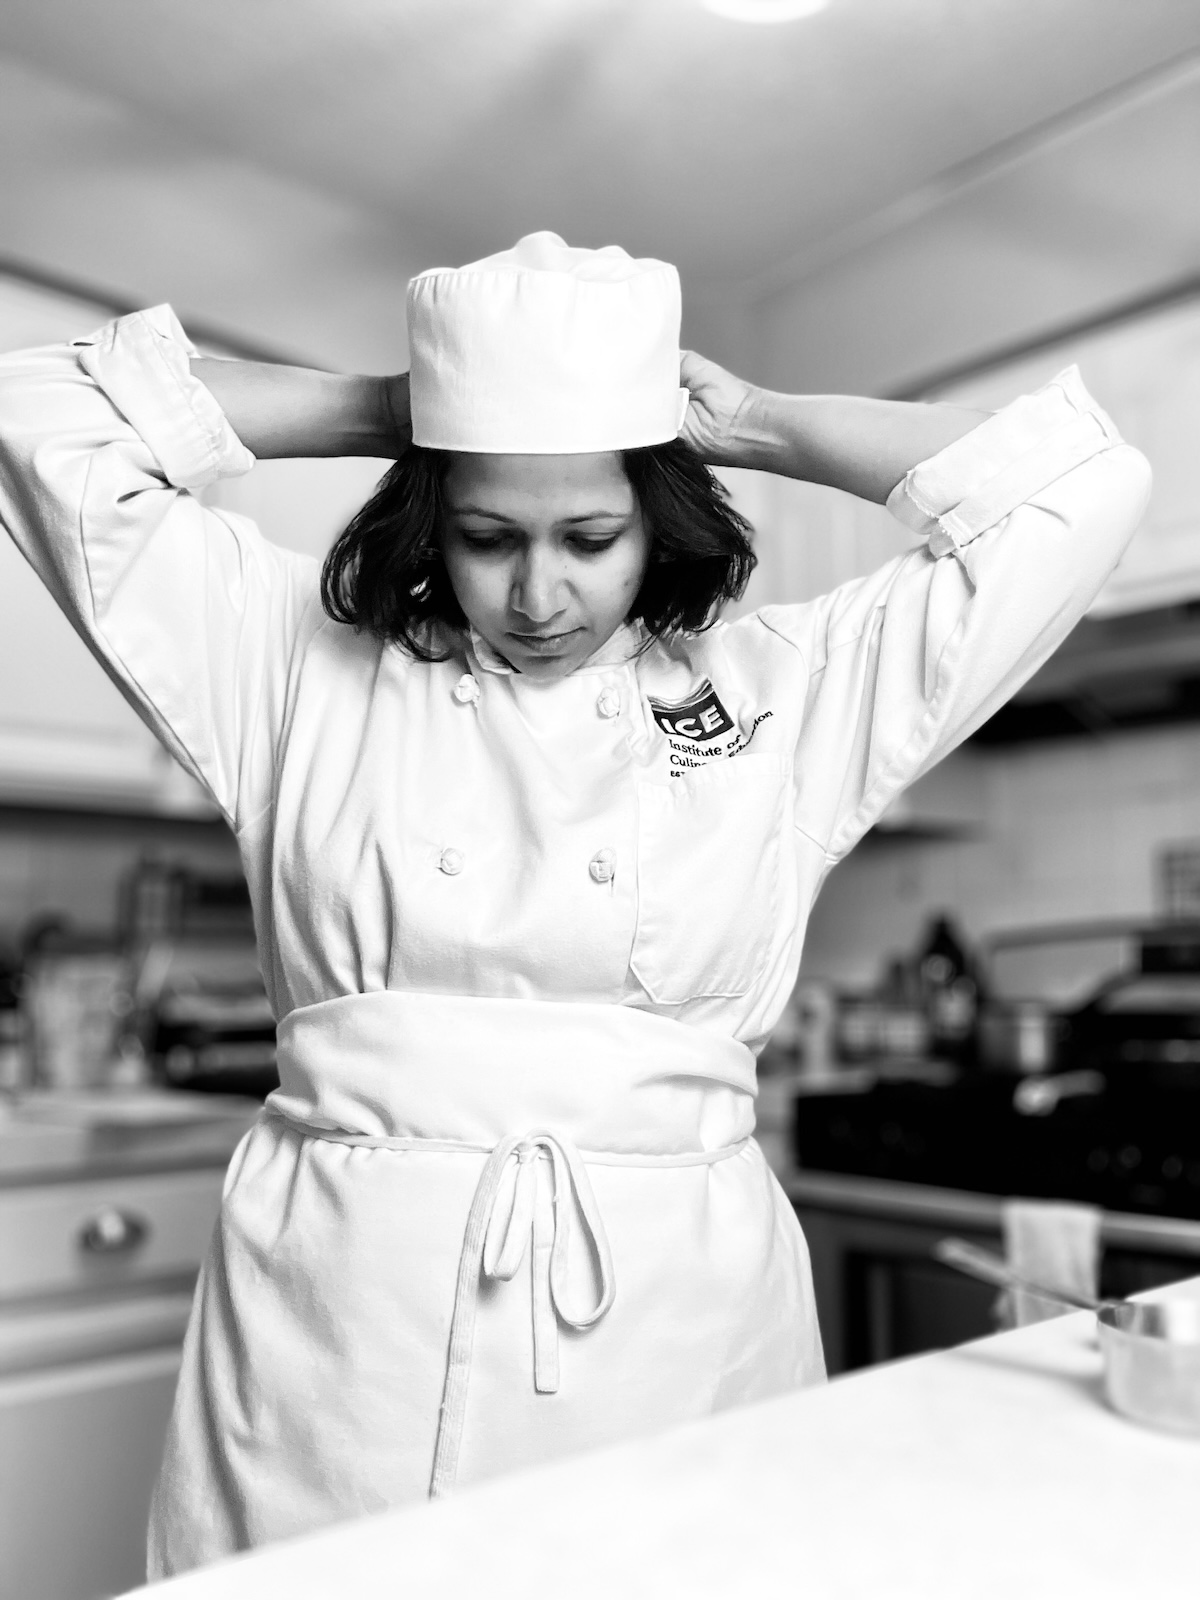 ICE culinary school online graduate Zakia "Trisha" Answary in uniform preparing to cook.